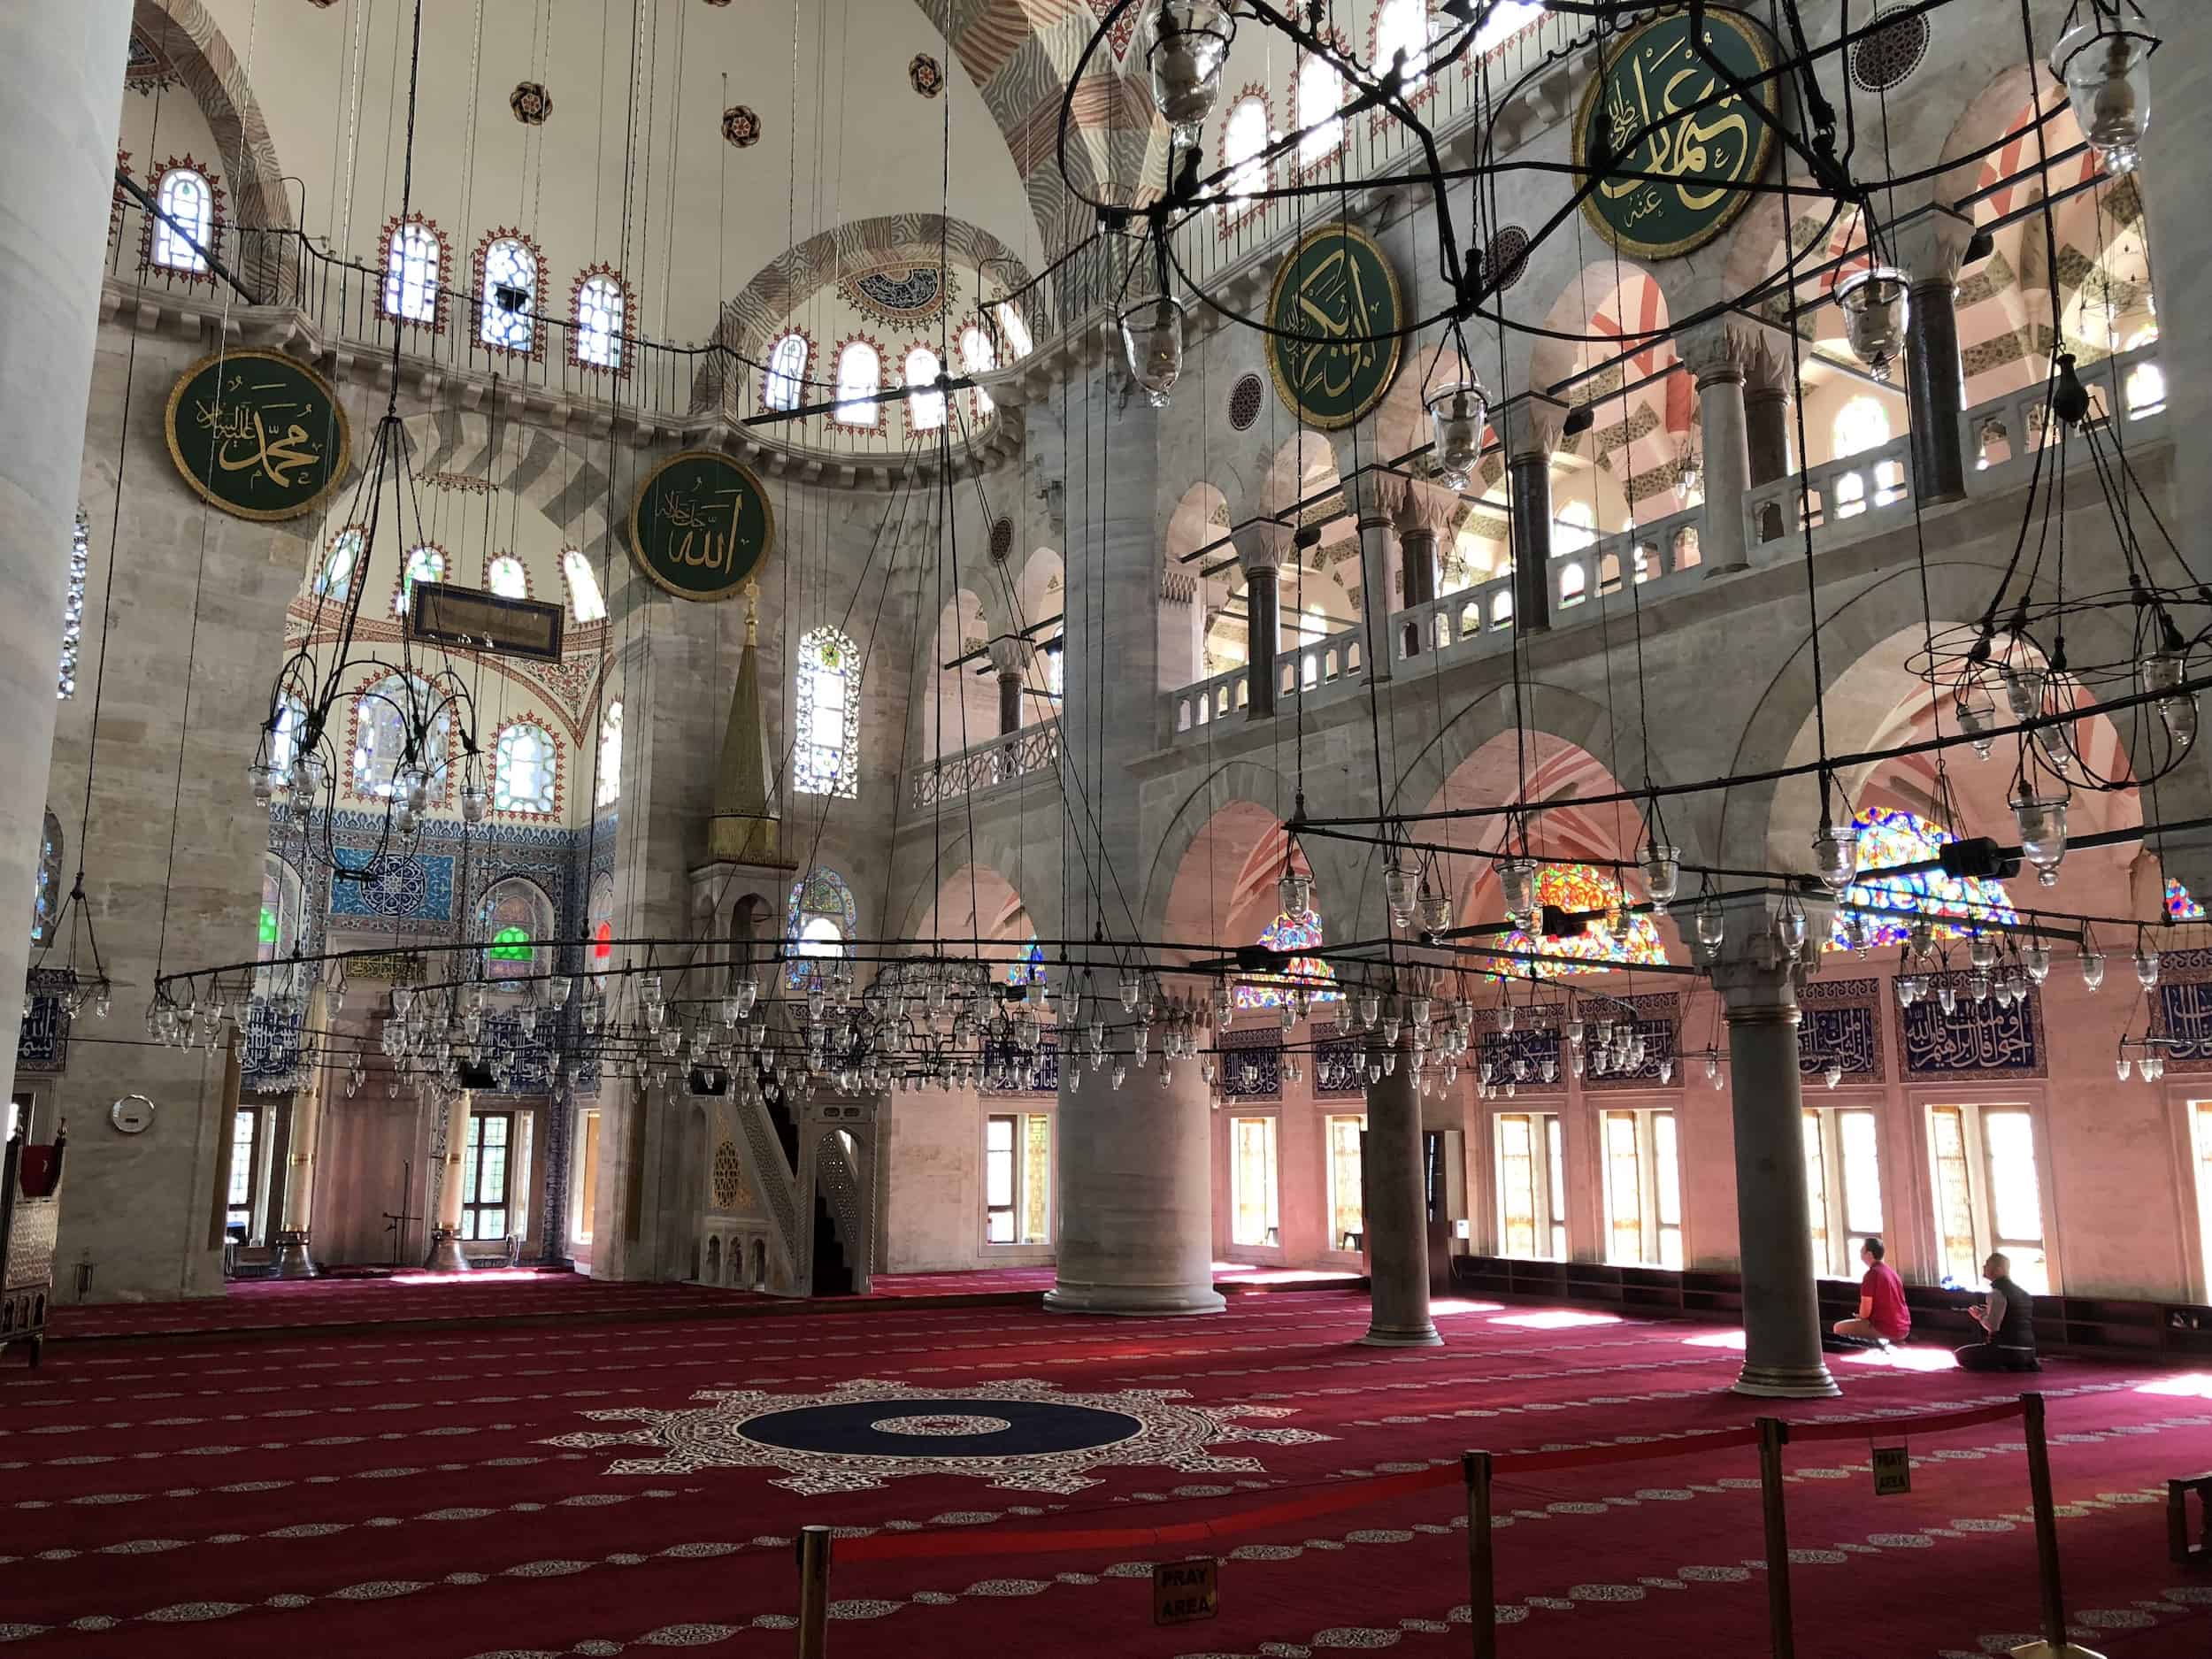 Prayer hall of the Kılıç Ali Pasha Mosque in Tophane, Istanbul, Turkey